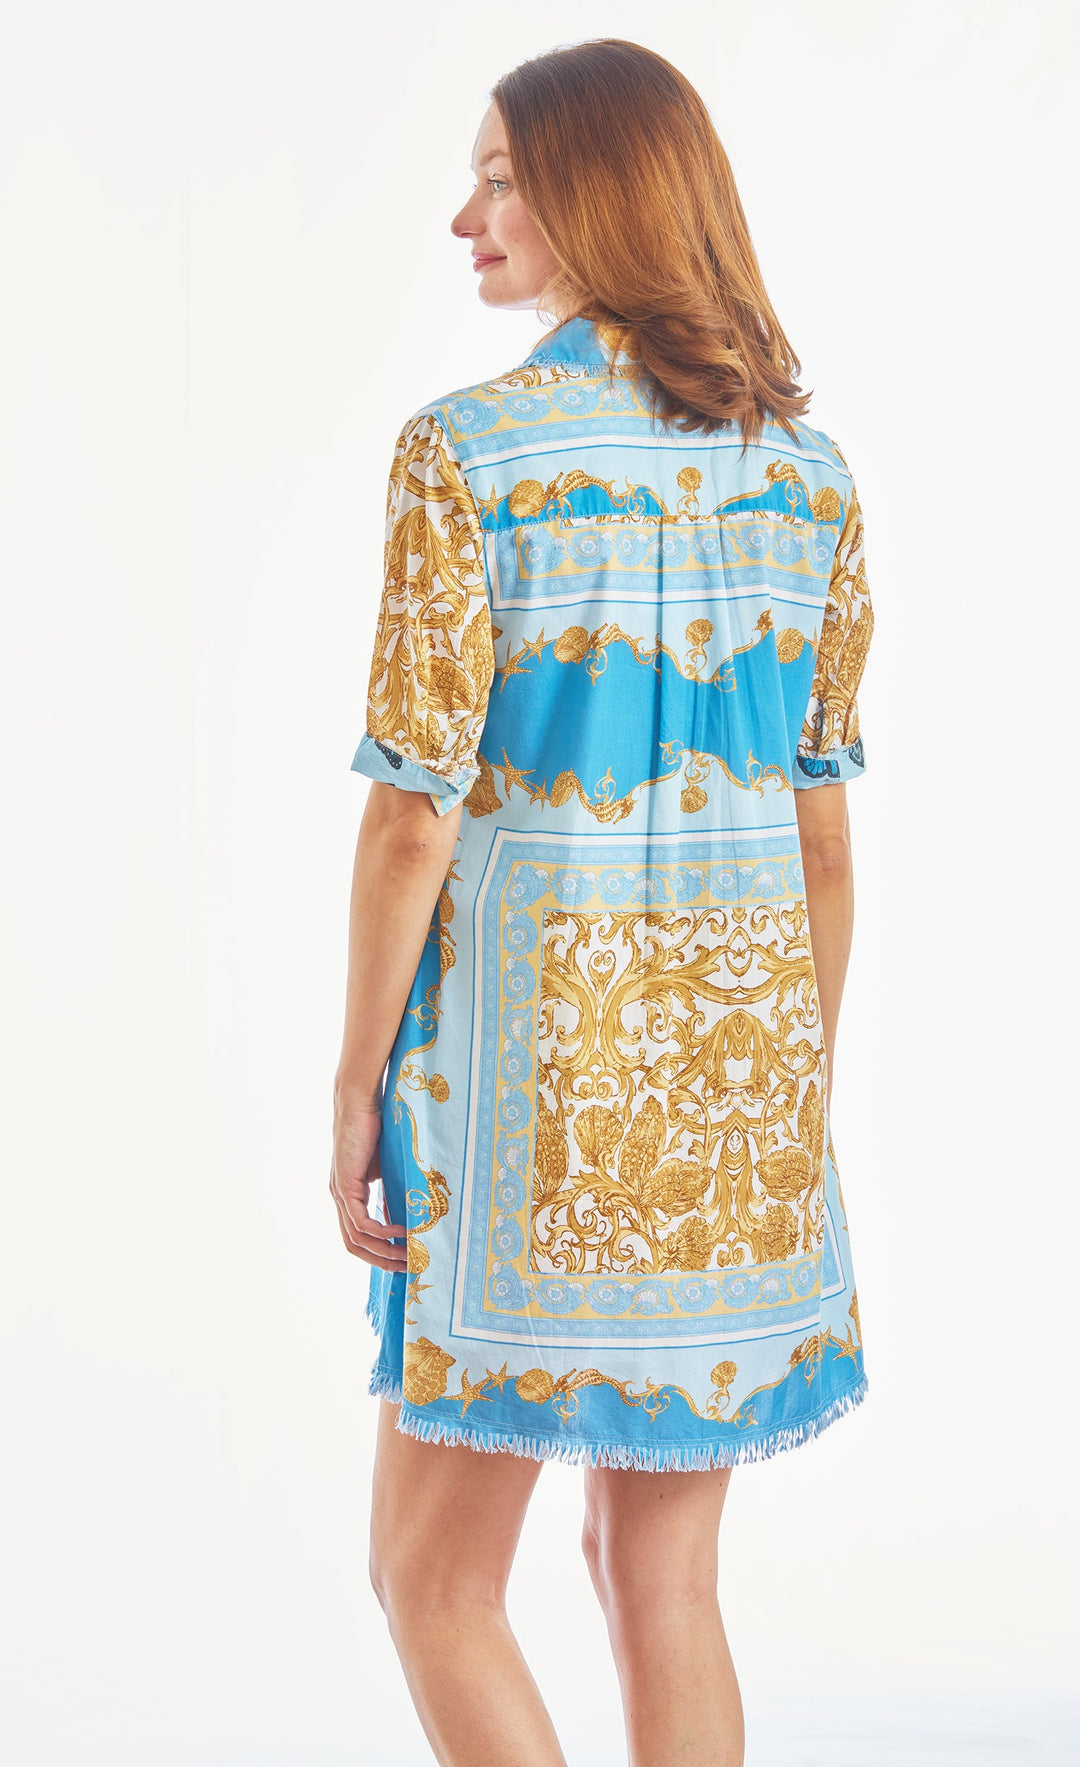 Chatham Dress Bluee Gold Scroll Print XS / 615A-S562